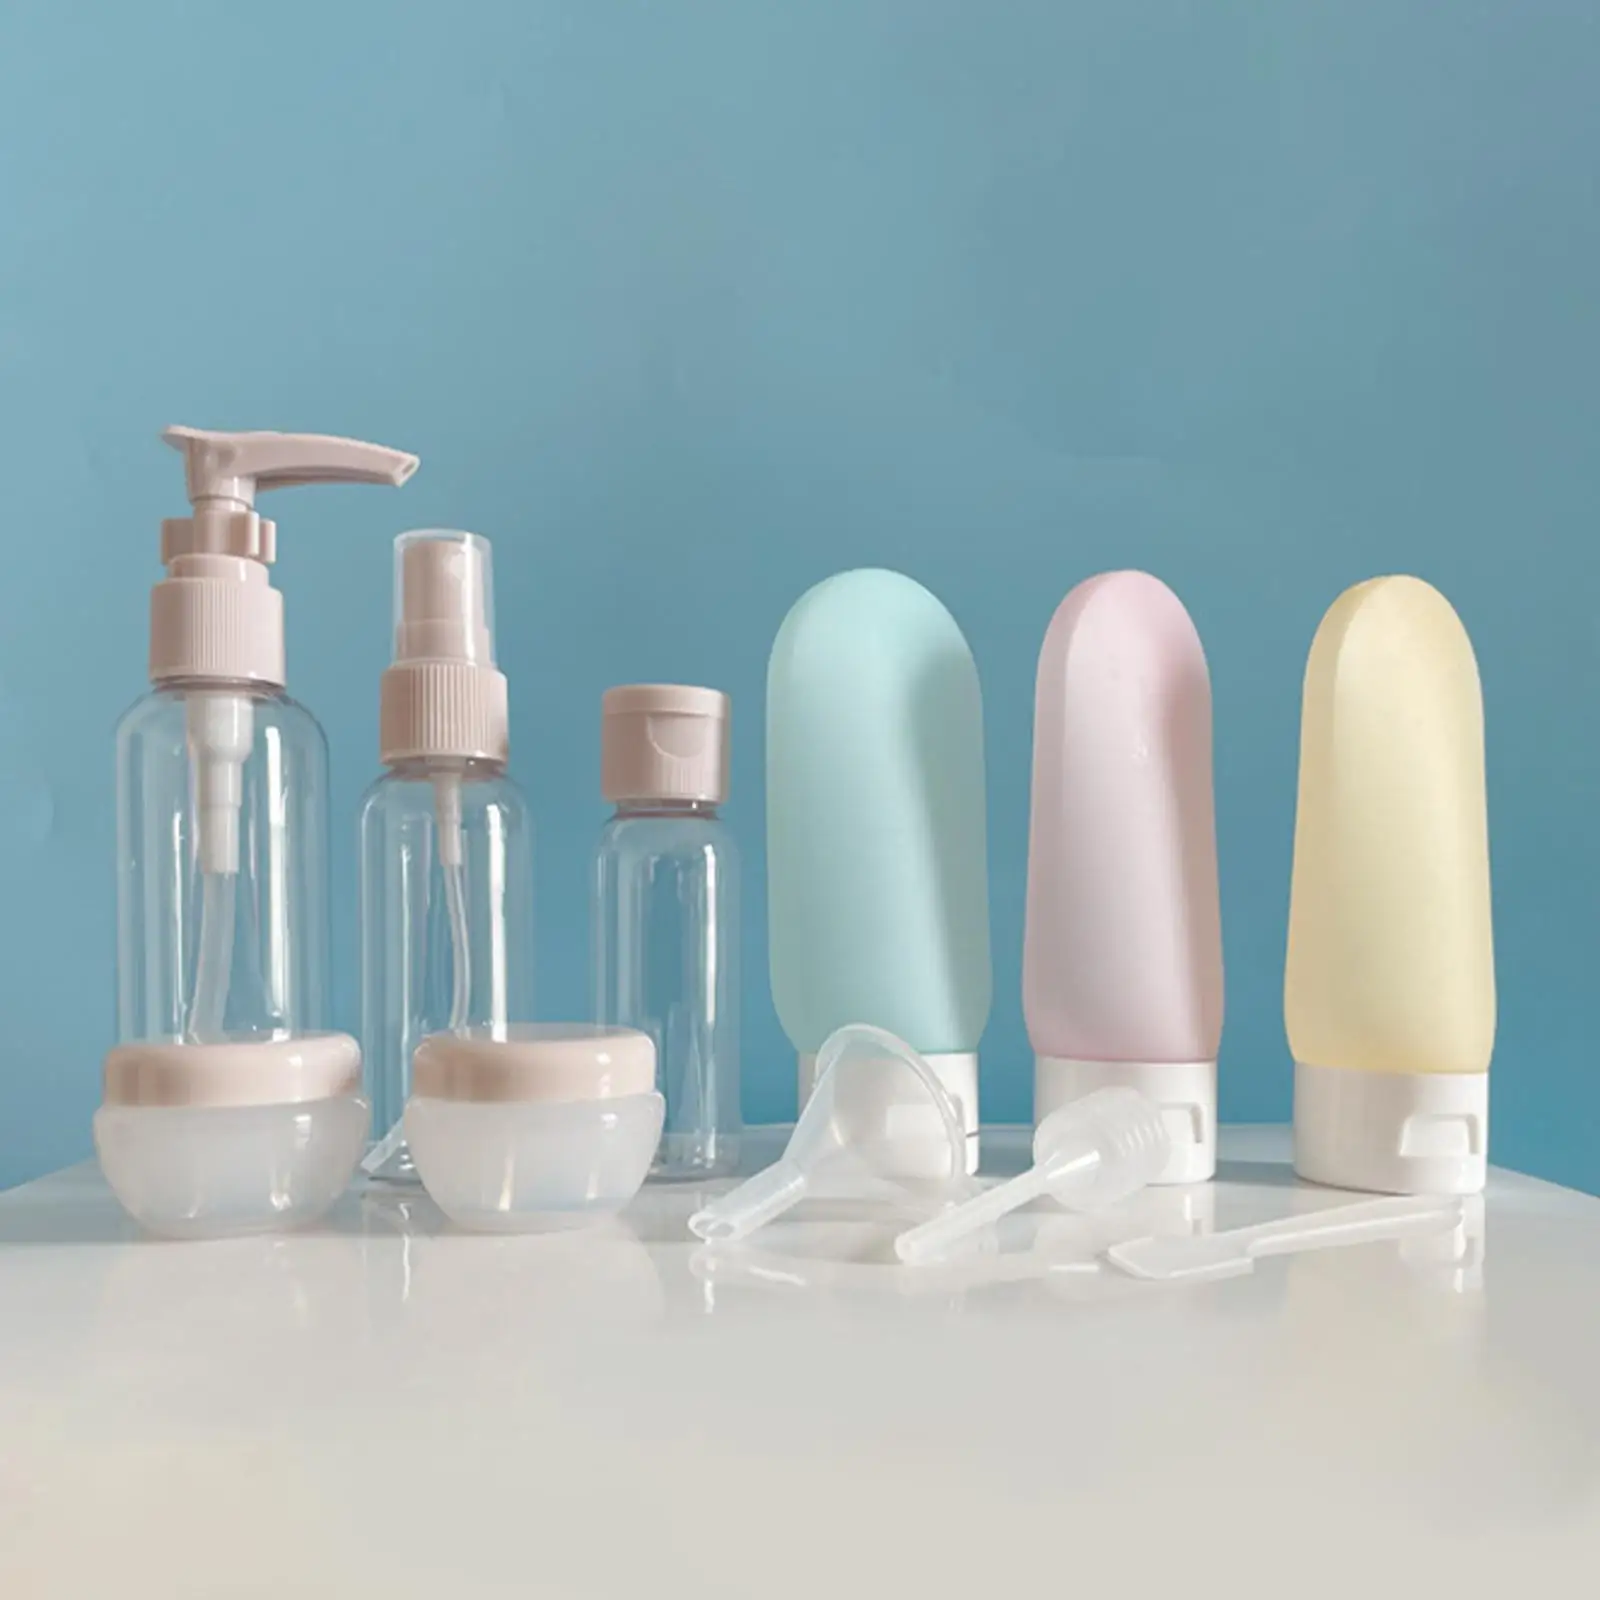 Squeezable Travel Accessories Shampoo Liquid Accessories Makeup Refillable Toiletries Set child Female